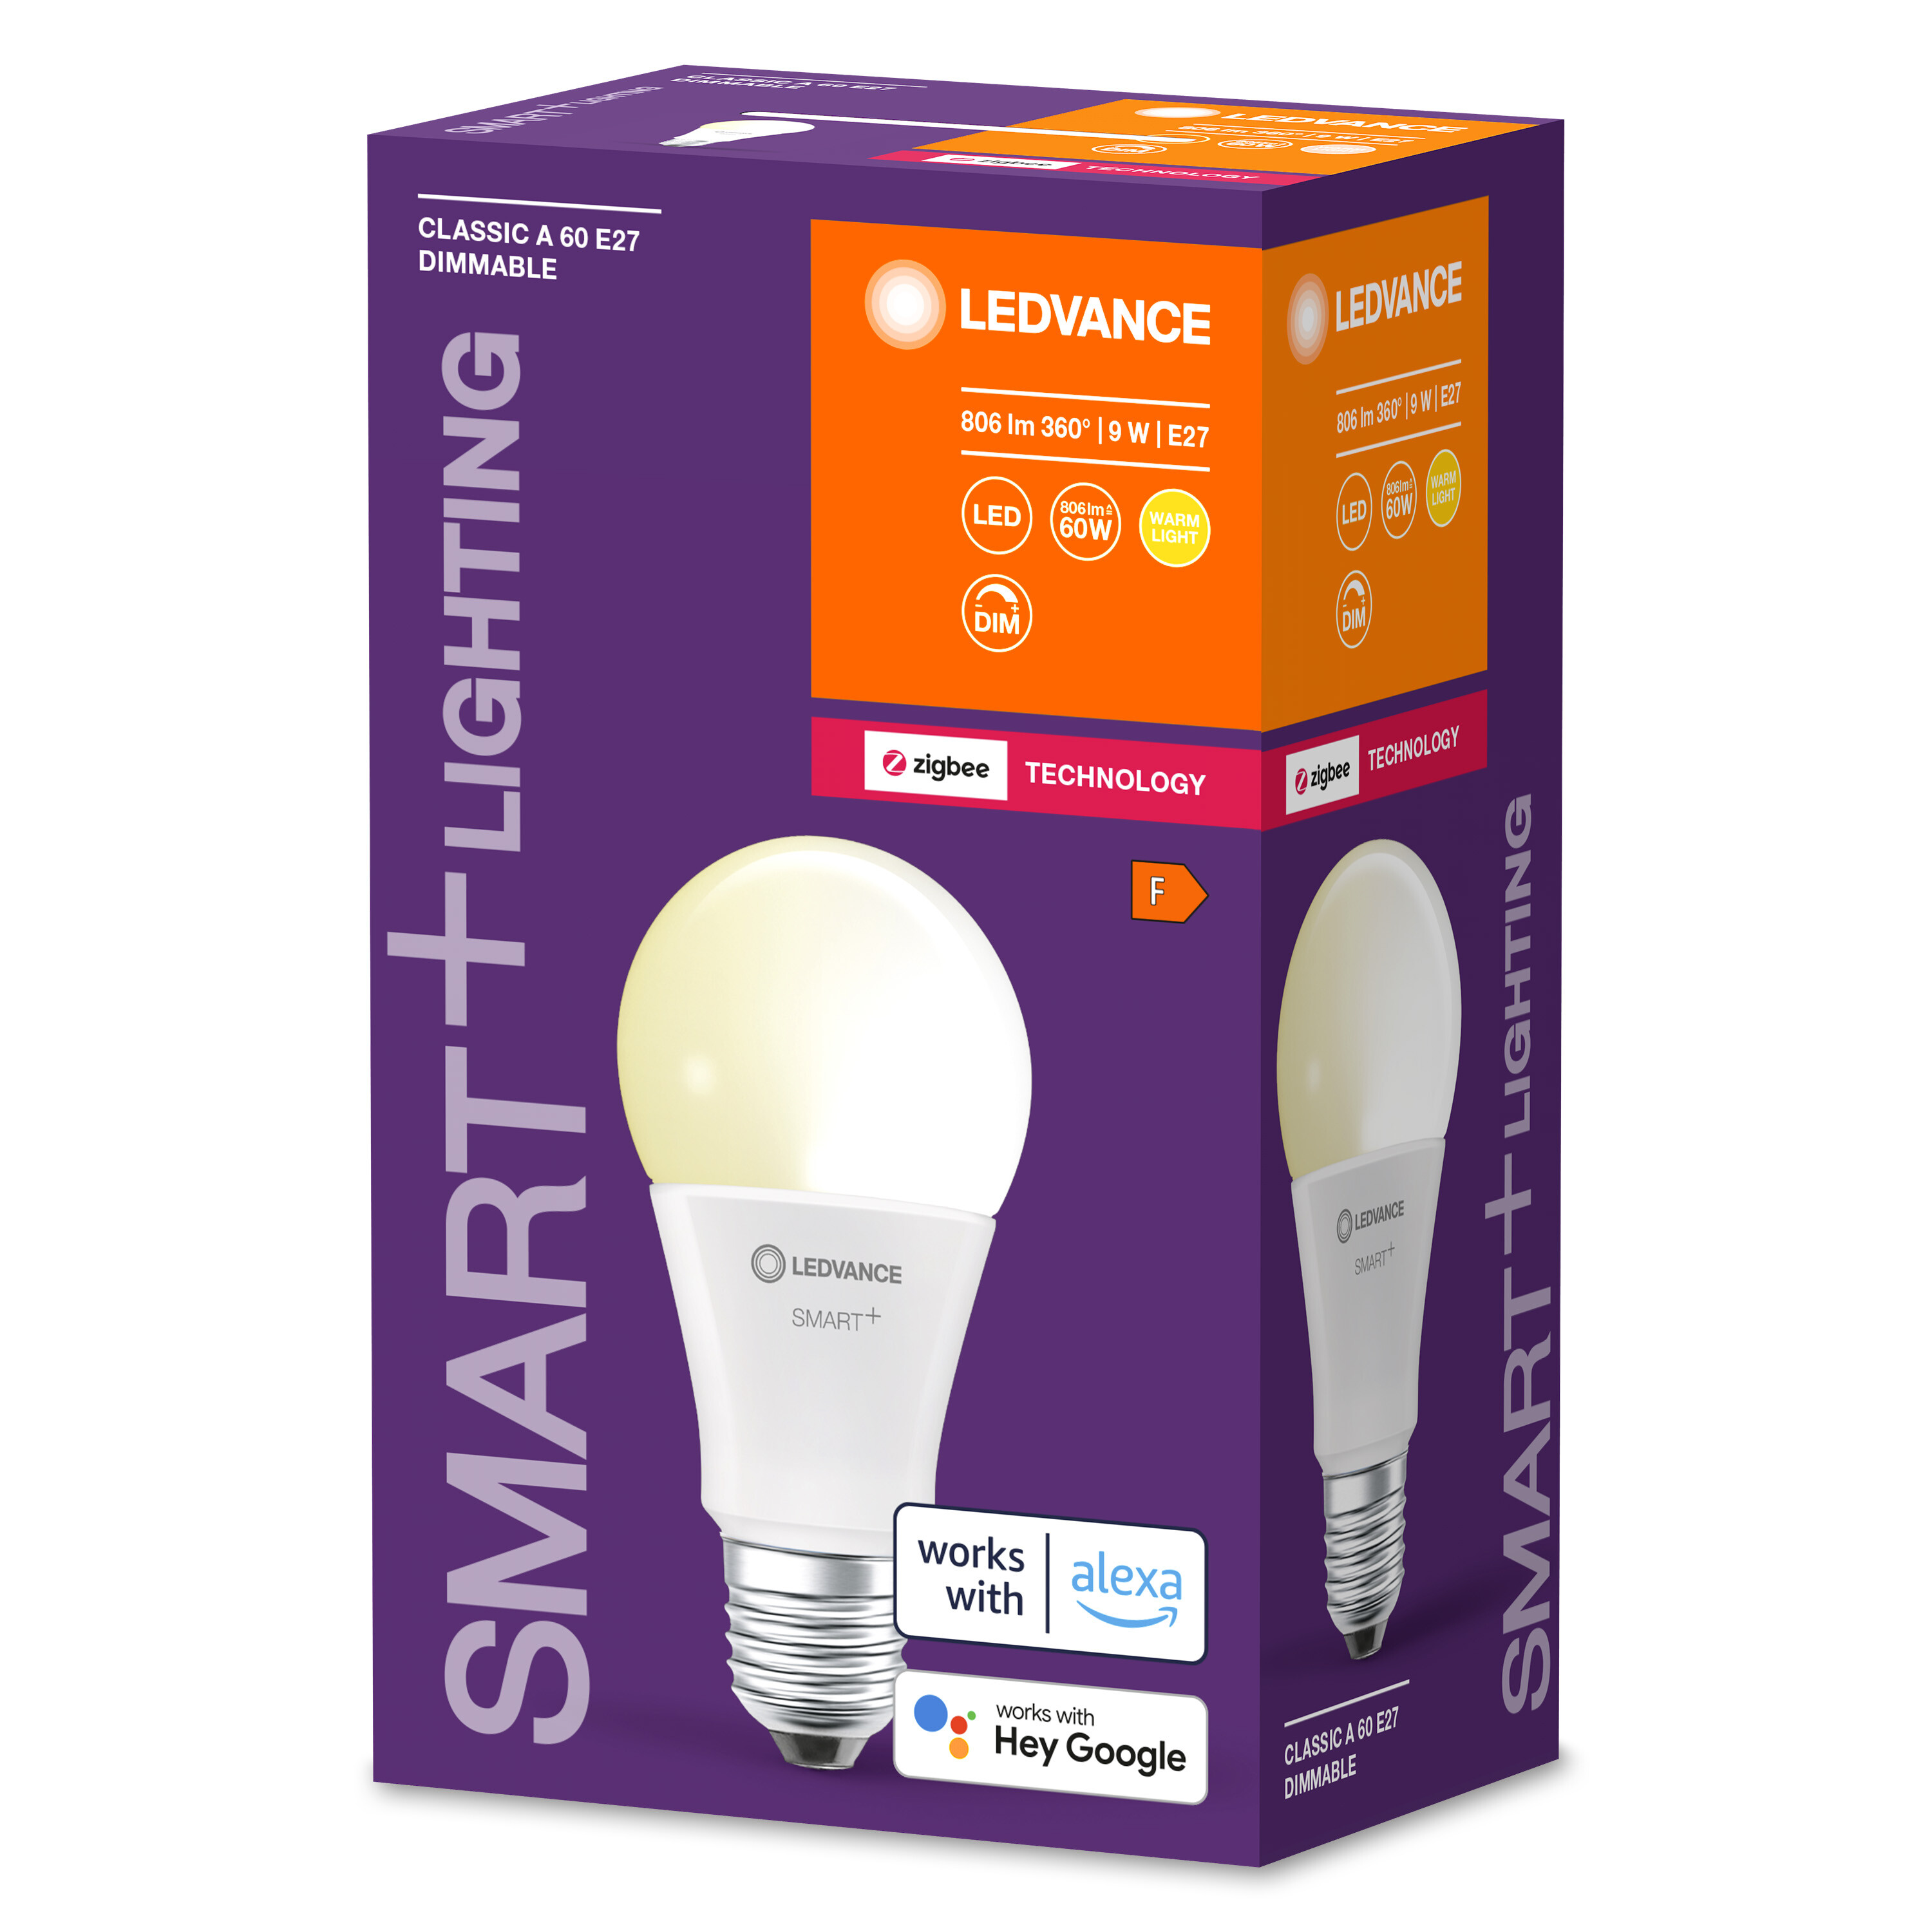 Classic LED Lampe LEDVANCE SMART+ Smarte Dimmable Warmweiß